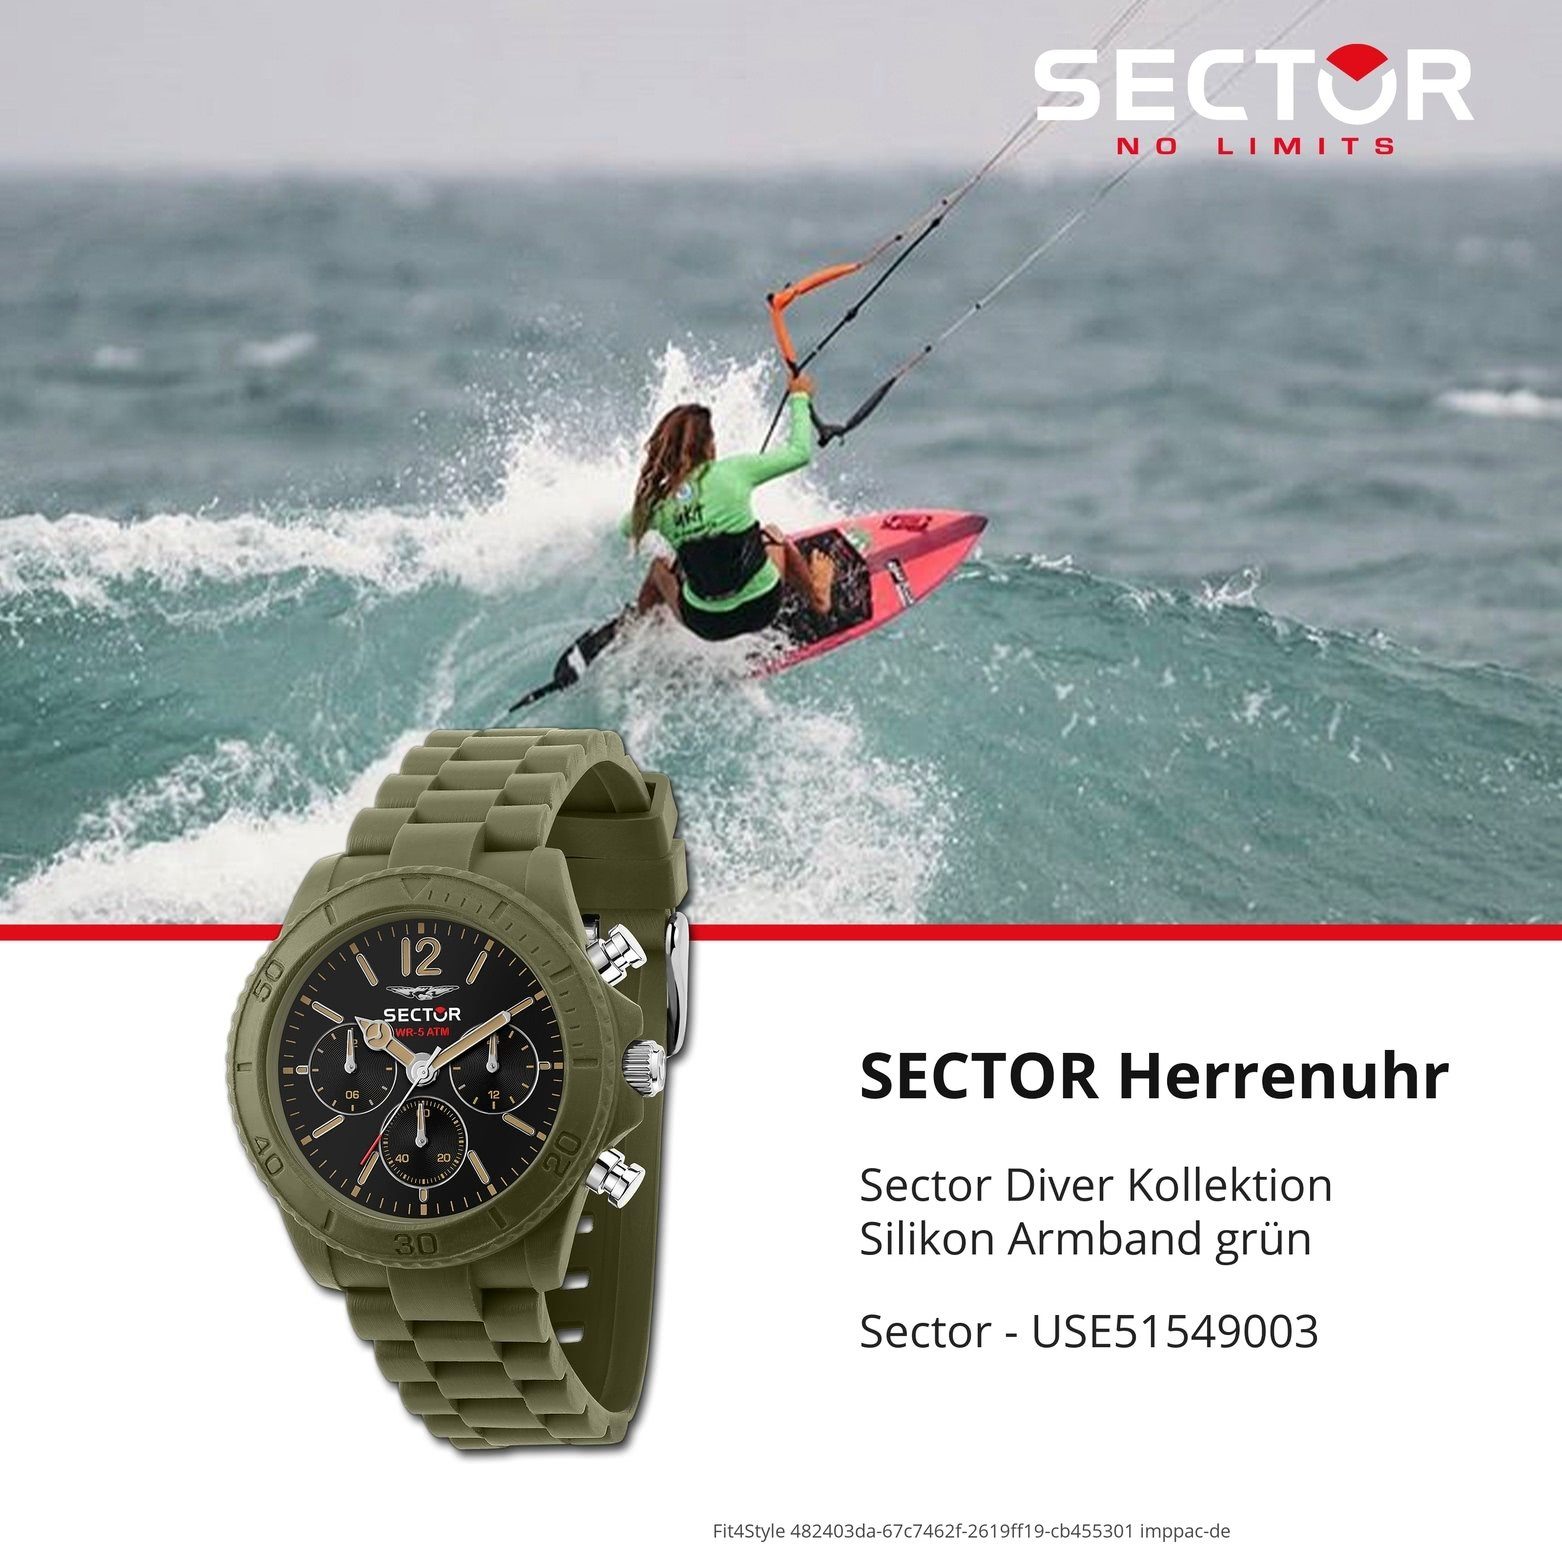 45mm), Fashion Sector Multifunktionsuhr (ca. Armbanduhr rund, Armbanduhr Herren Herren grün, Silikonarmband Multifunktion, Sector groß